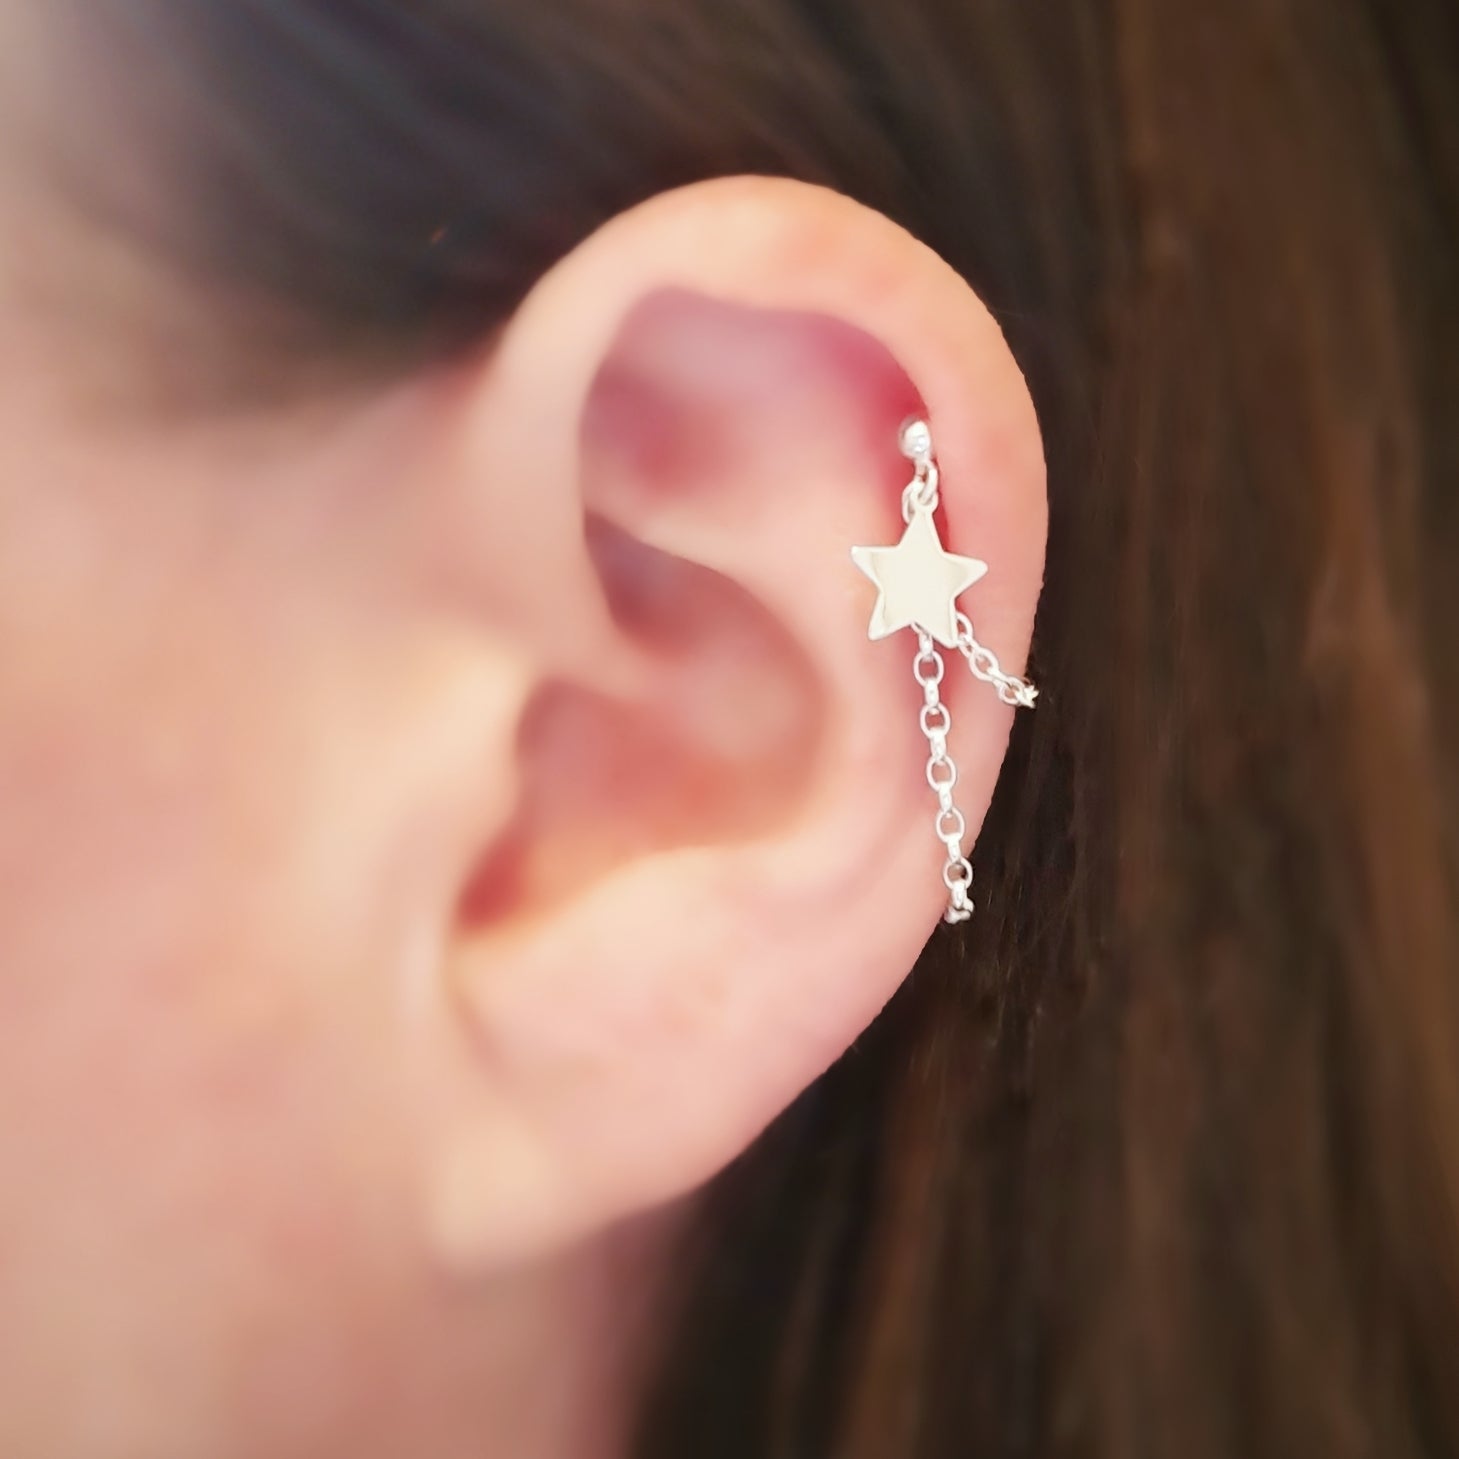 Star Cartilage Earring Helix Piercing